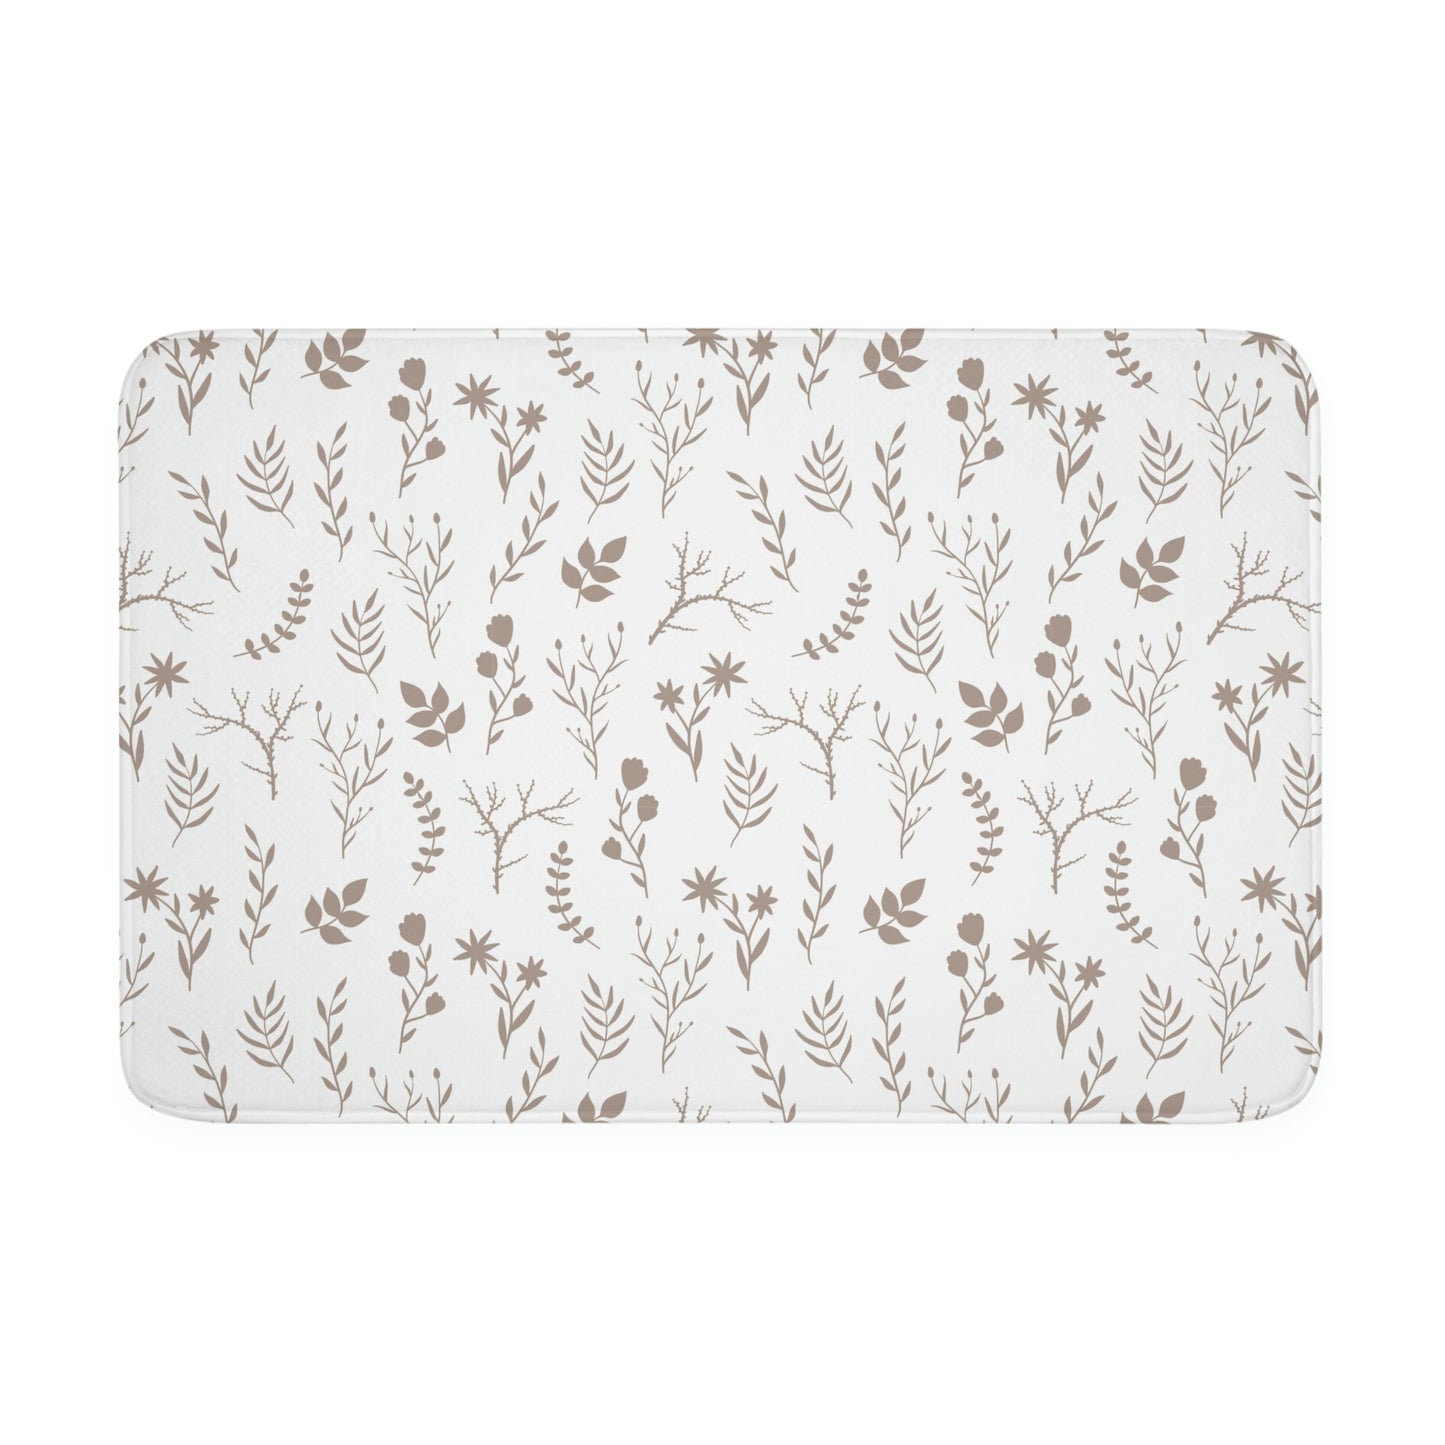 Taupe and White Floral Print Bathmat | Modern Floral Bathmat